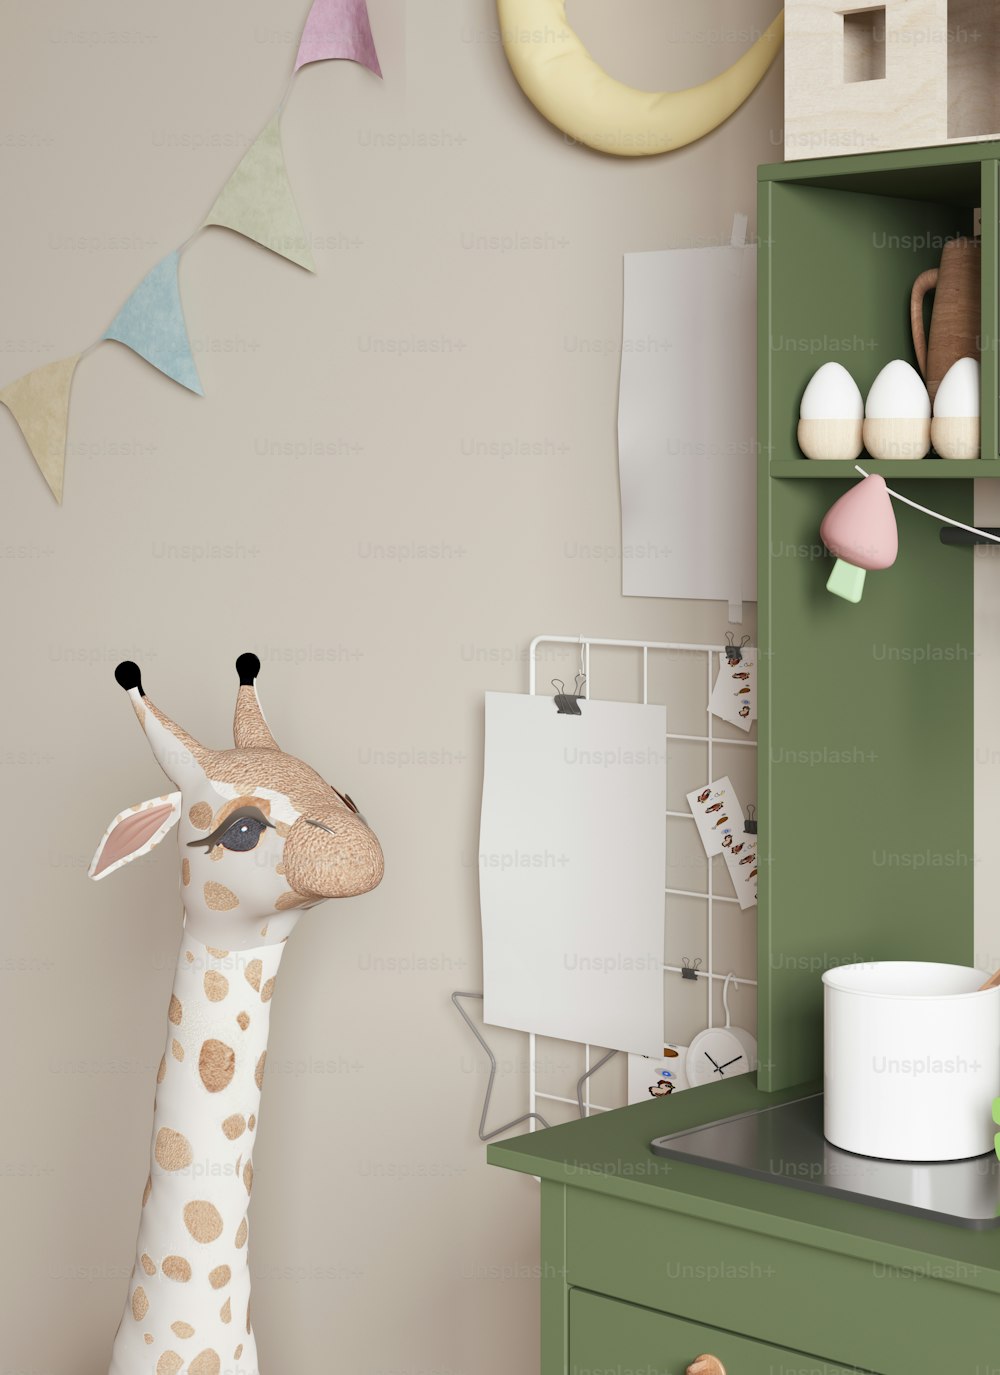 a toy giraffe standing next to a green cabinet